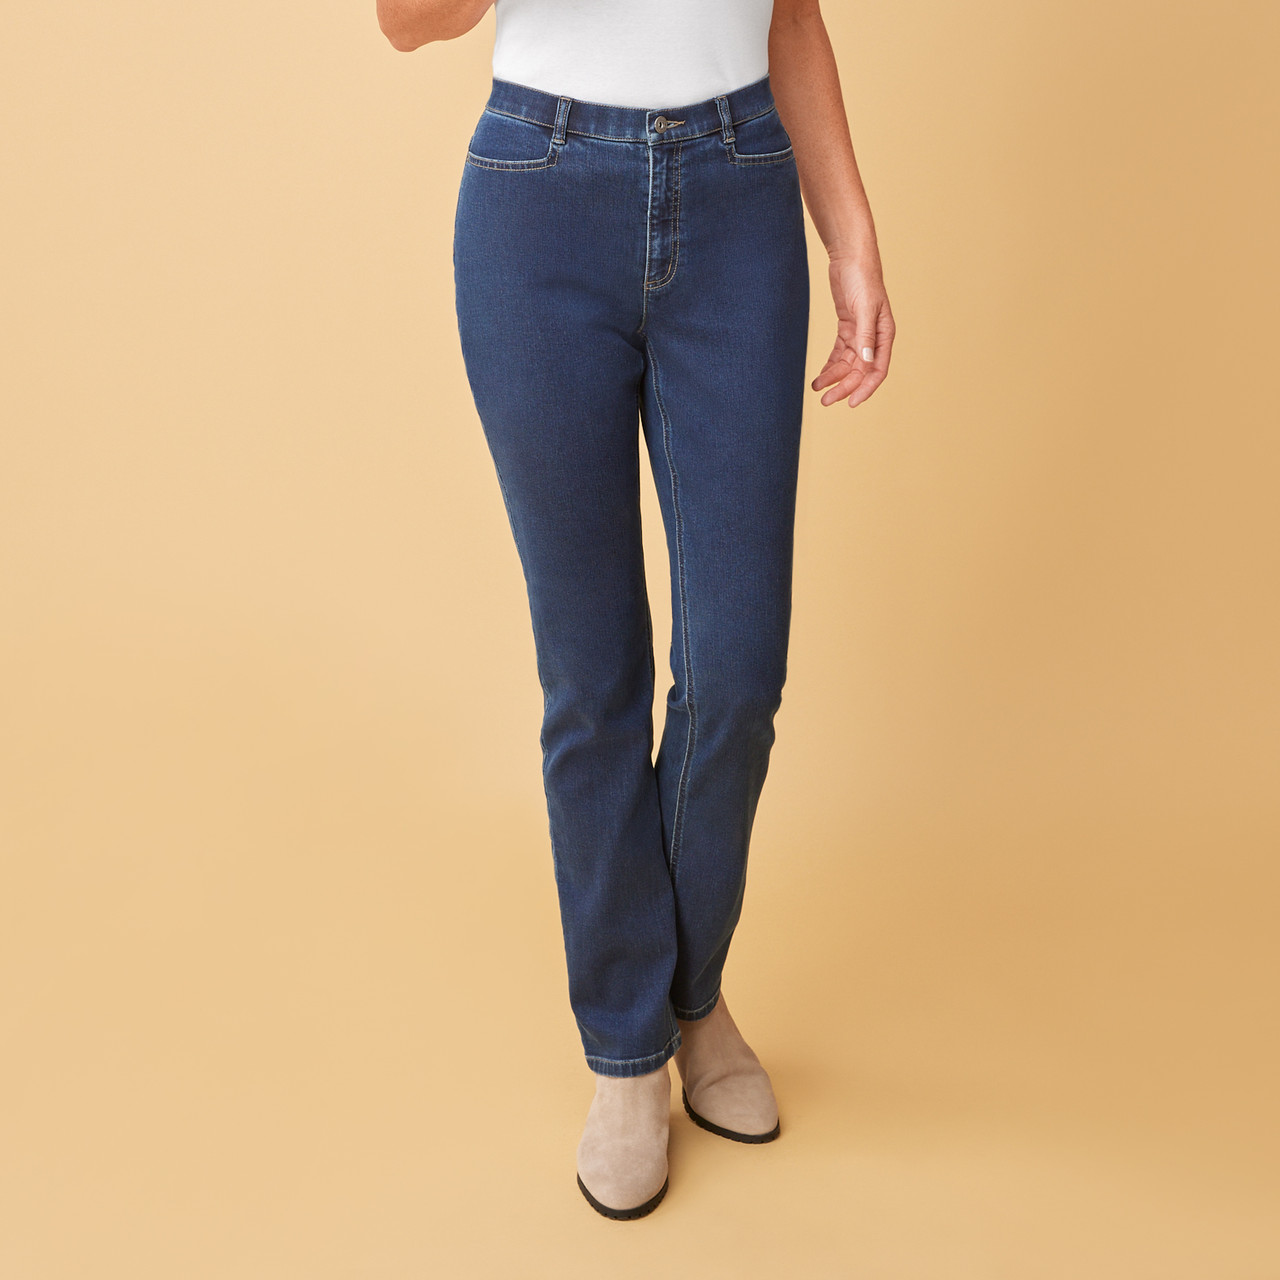 Lee Comfort Waistband Stretch Jeans Women's 12 Short Blue Mid Rise Cotton  Blend